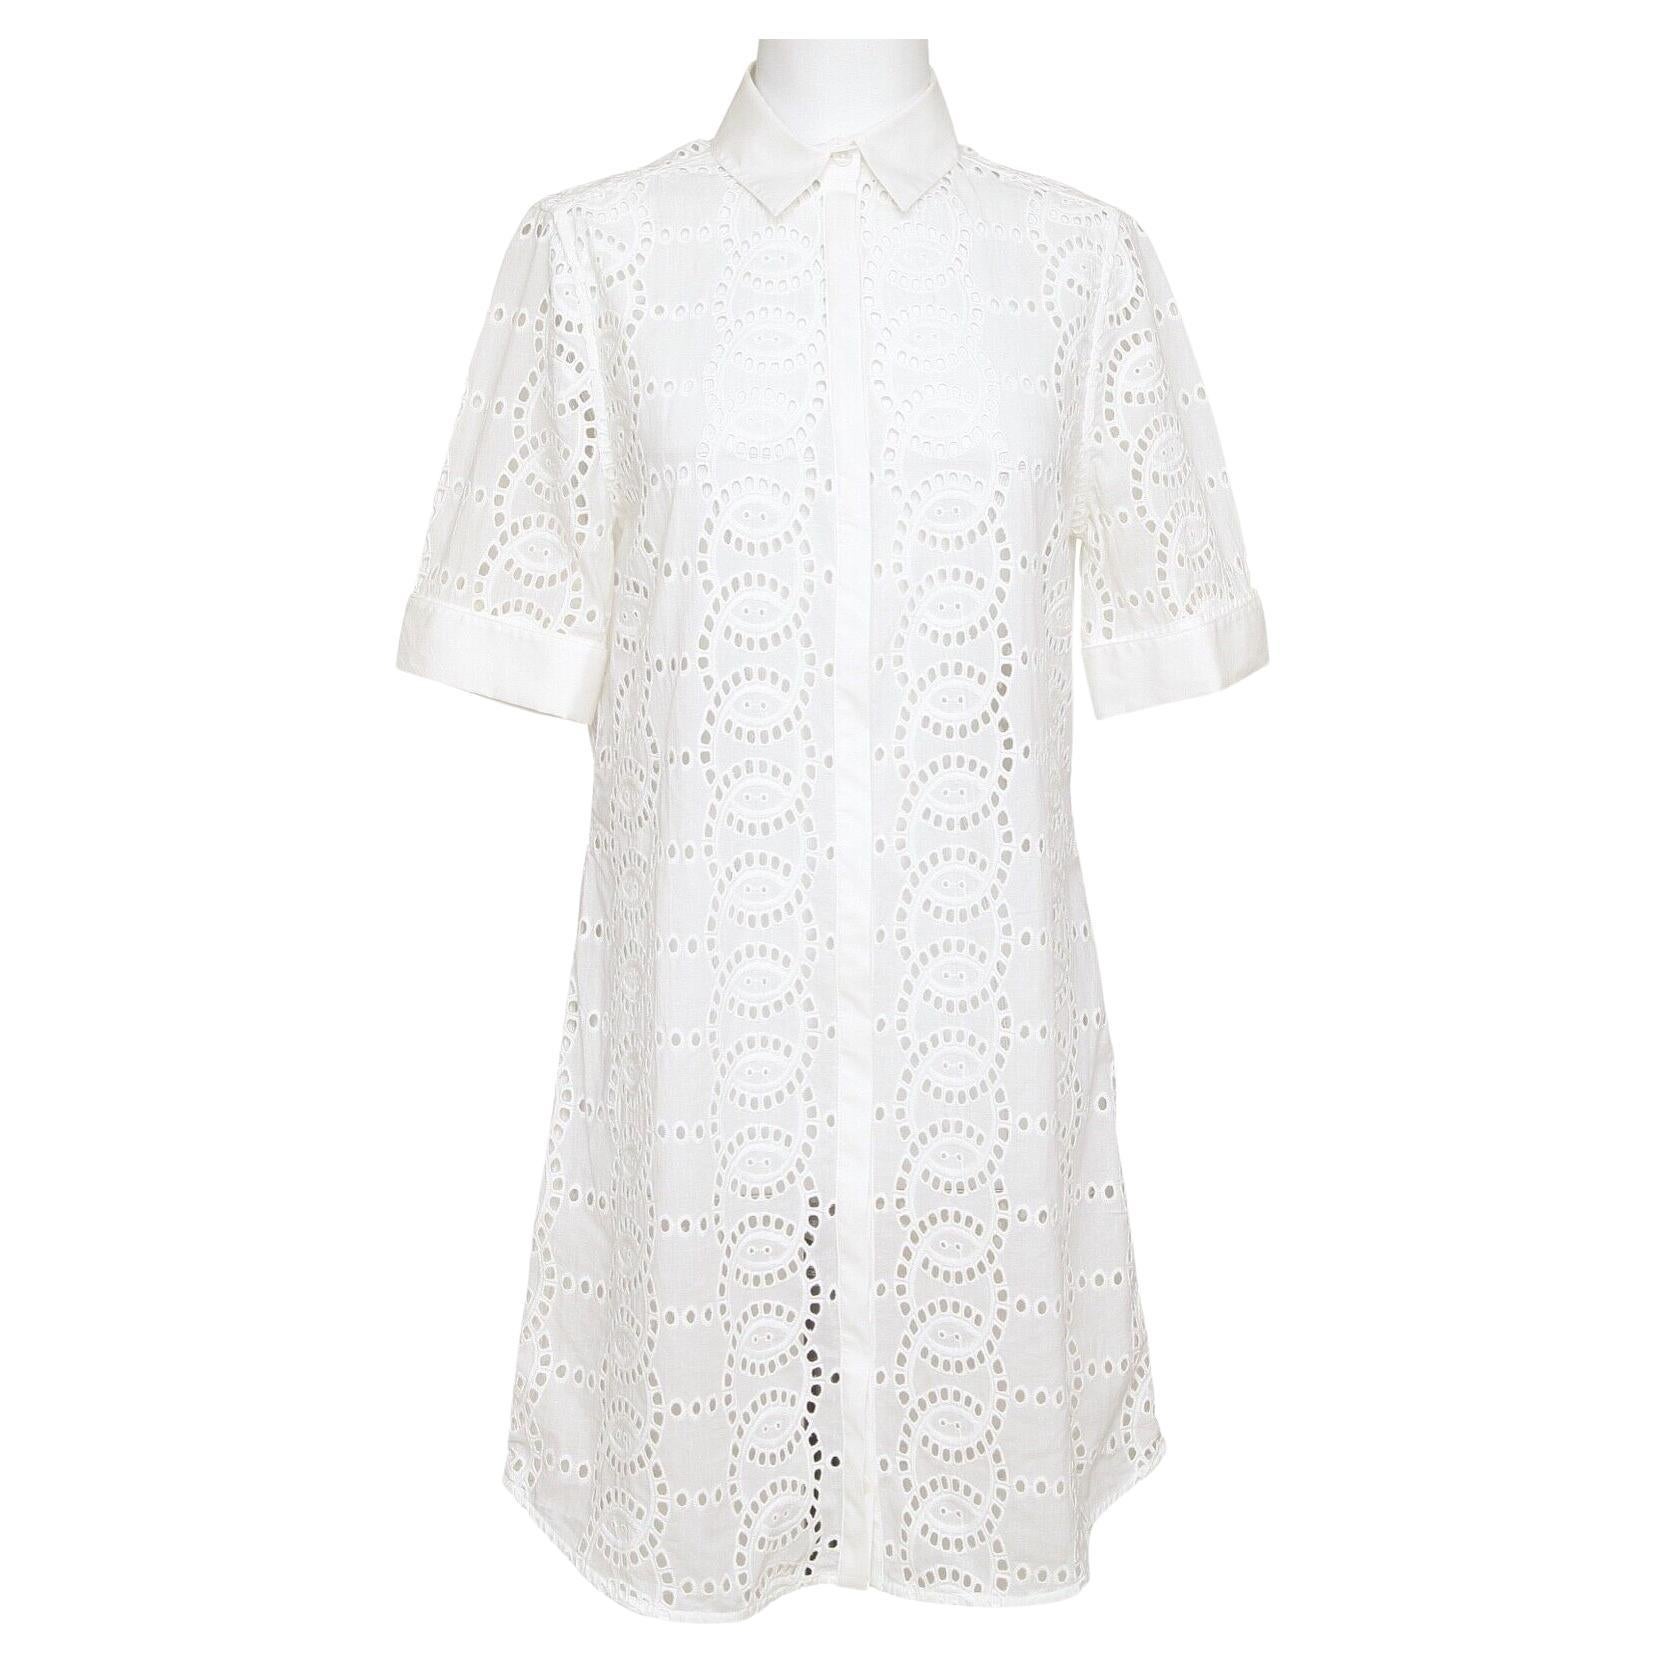 ANNE FONTAINE Shirt Dress White Short Sleeve Button Down Eyelet Collar Cotton 40